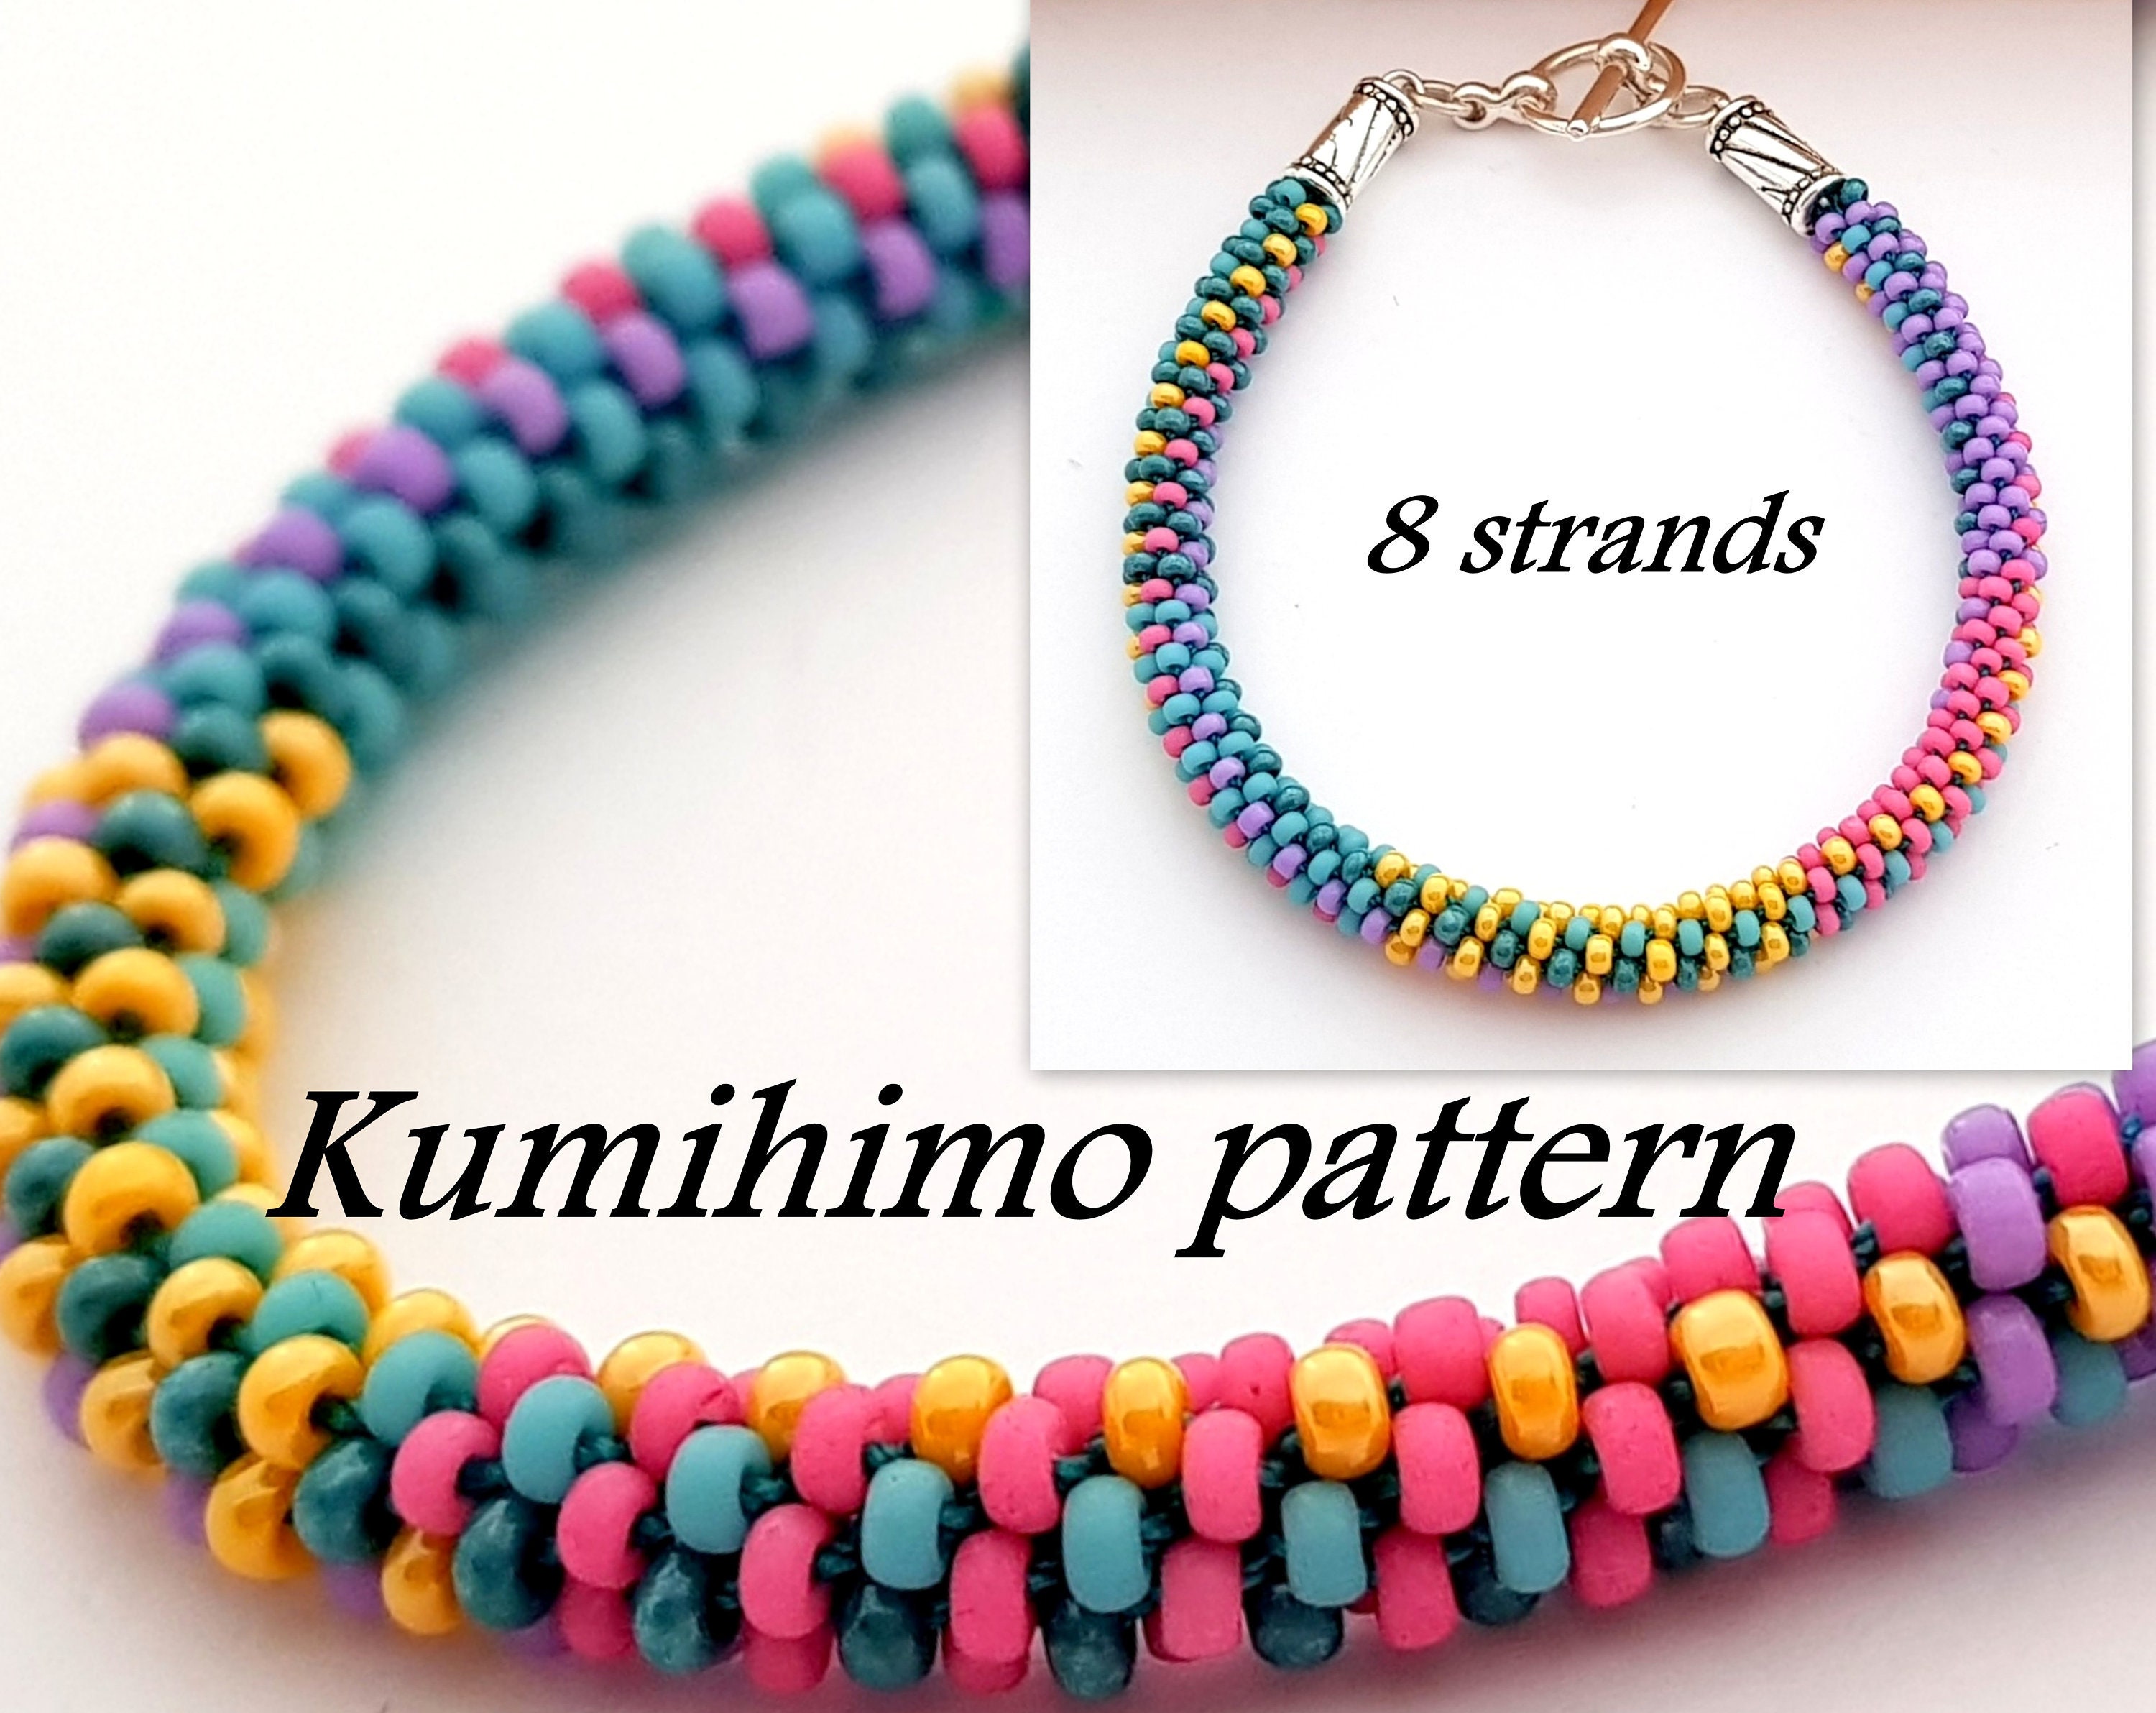 25+ Kumihimo Jewelry Patterns and Tutorials